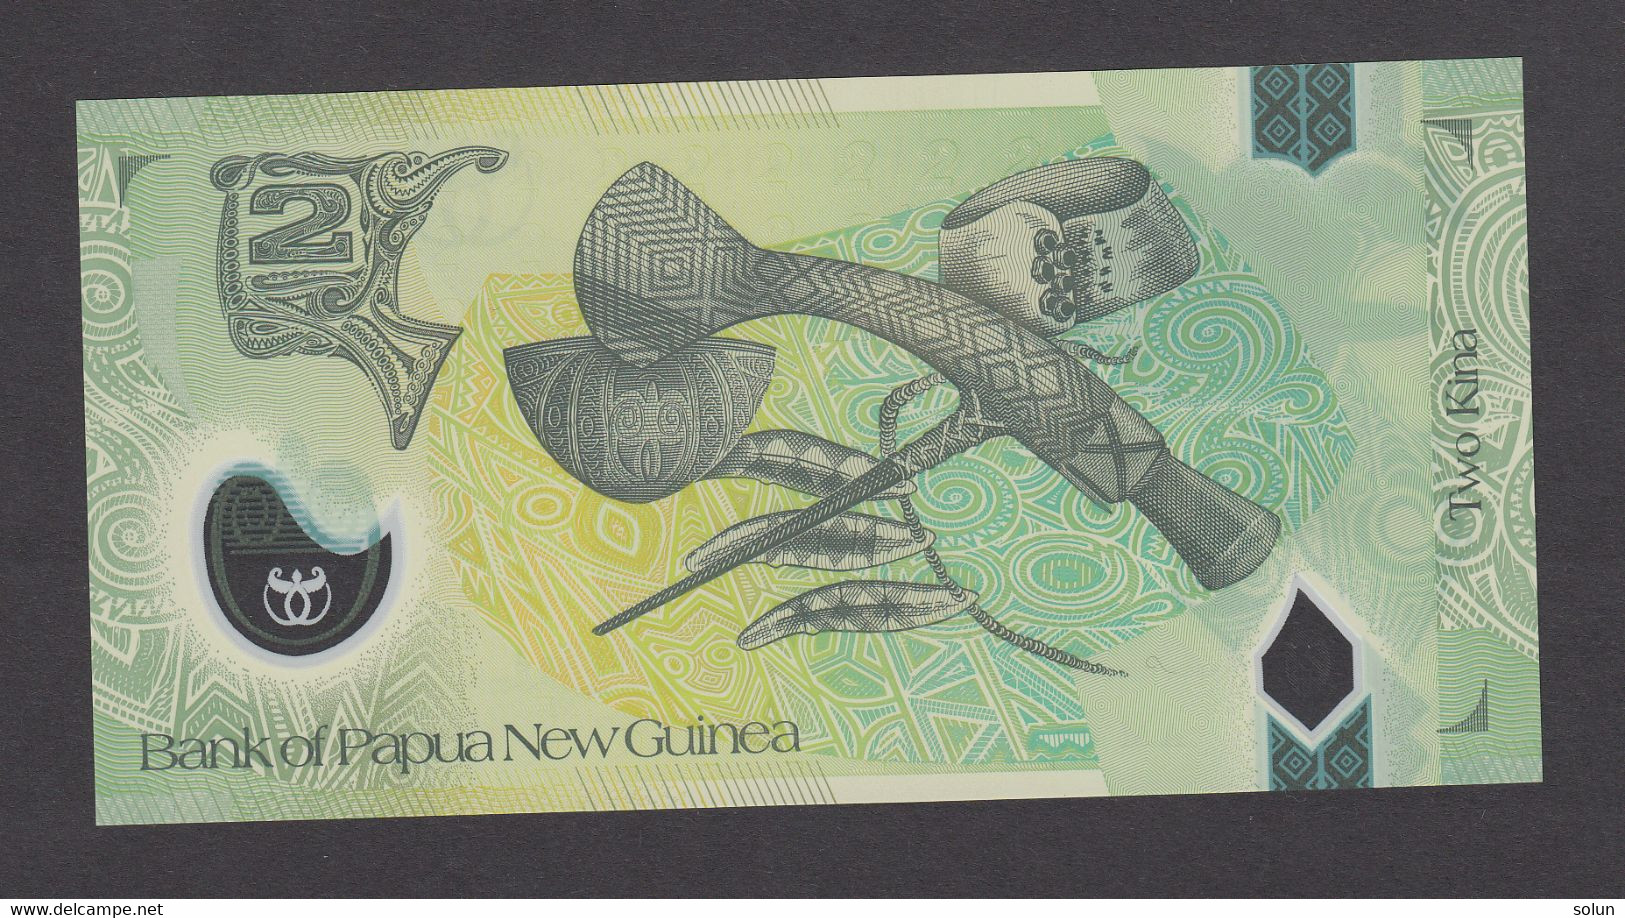 2 TWO KINA  BANK OF PAPUA NEW GUINEA BANKNOTE - Papua-Neuguinea